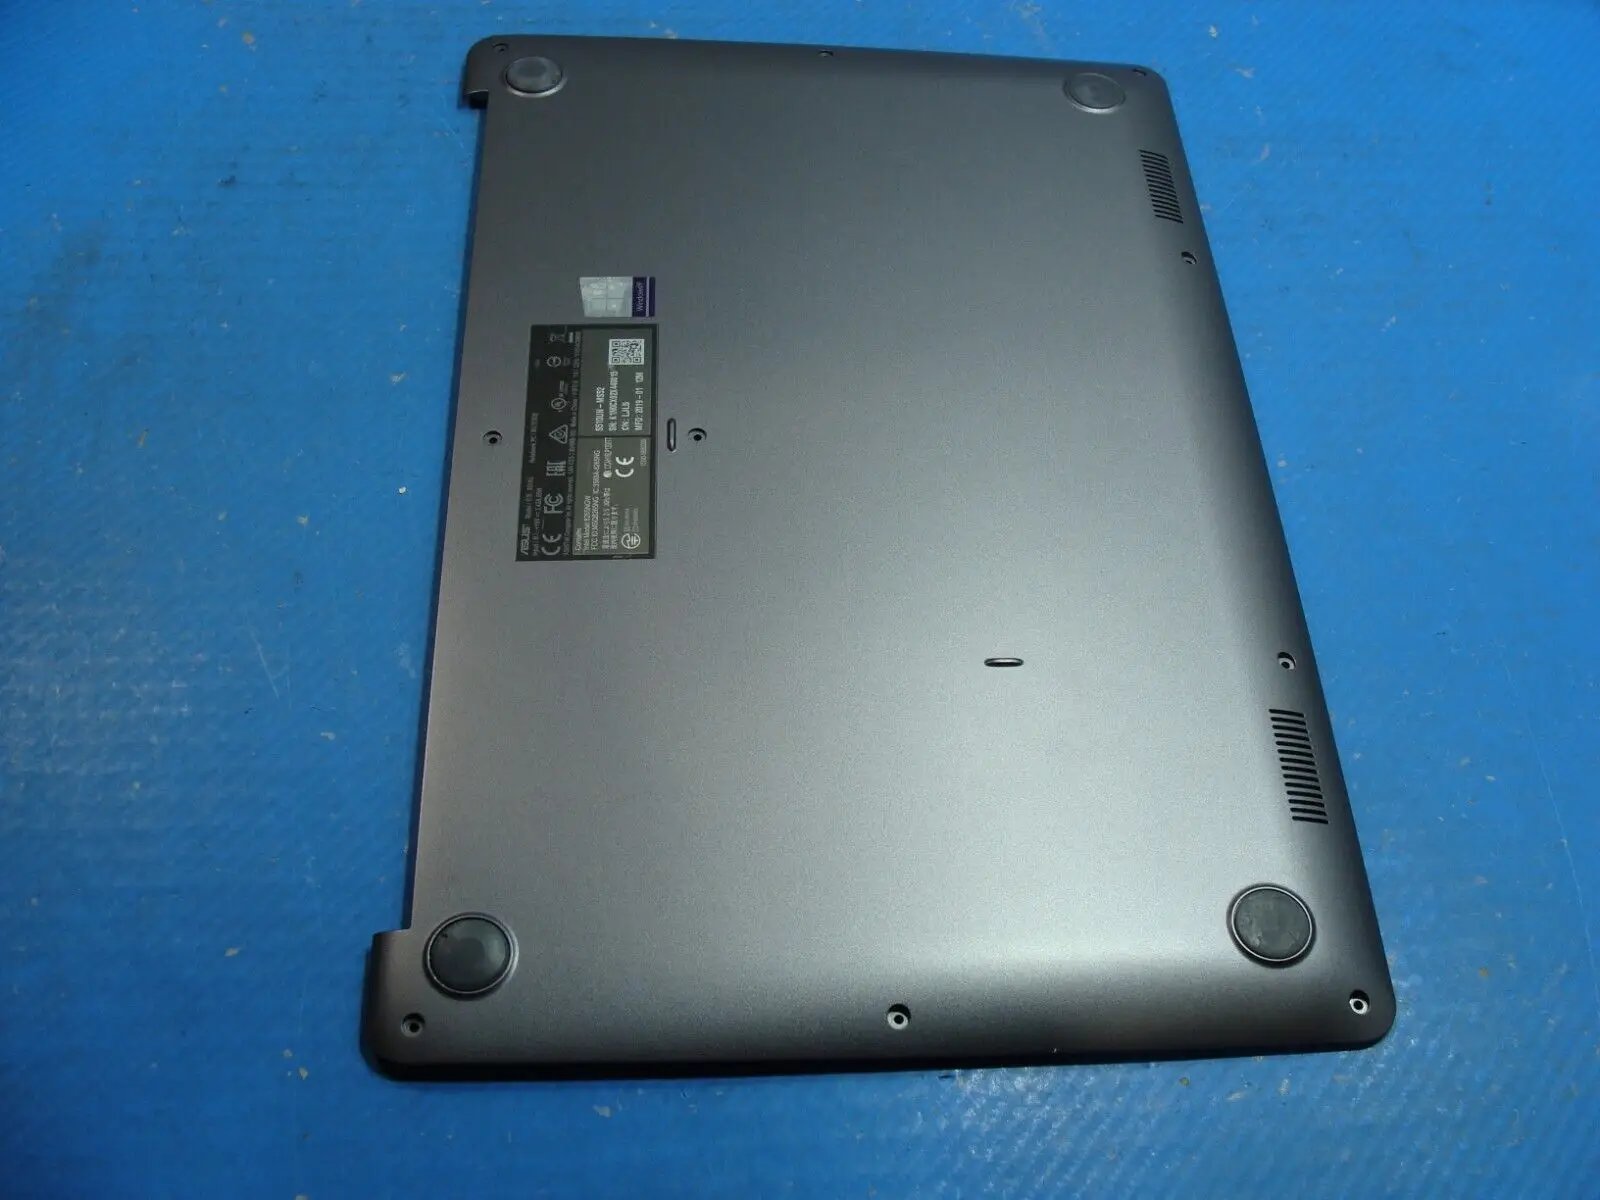 Asus VivoBook S510UN-MS52 15.6